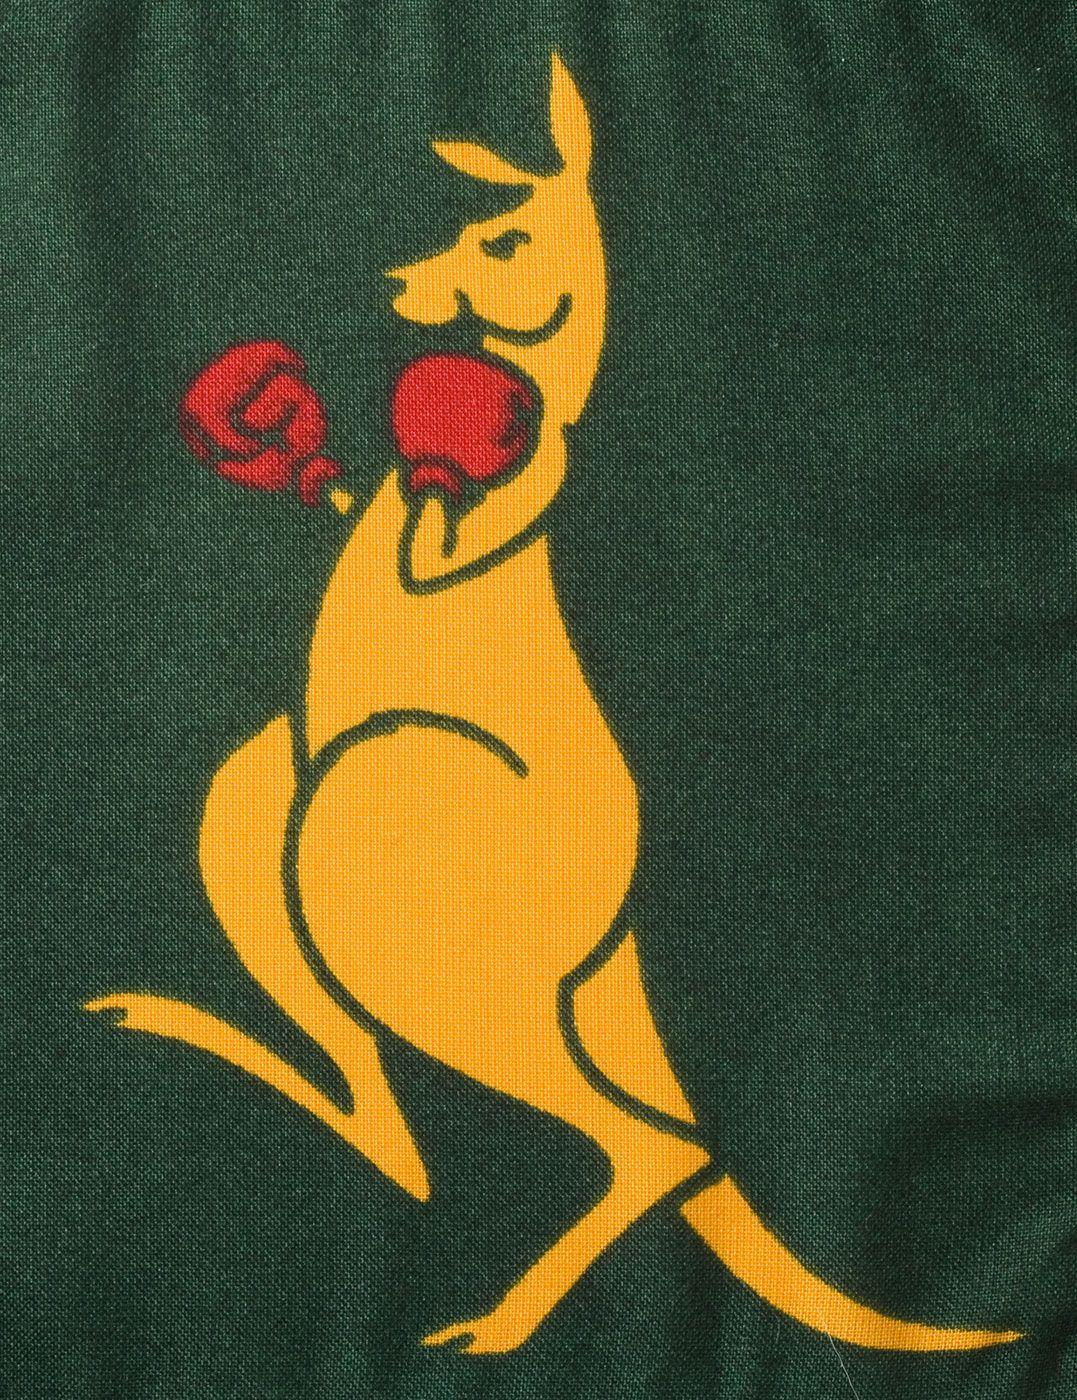 Australian Army Kangaroo Logo - Kangaroo | National Museum of Australia